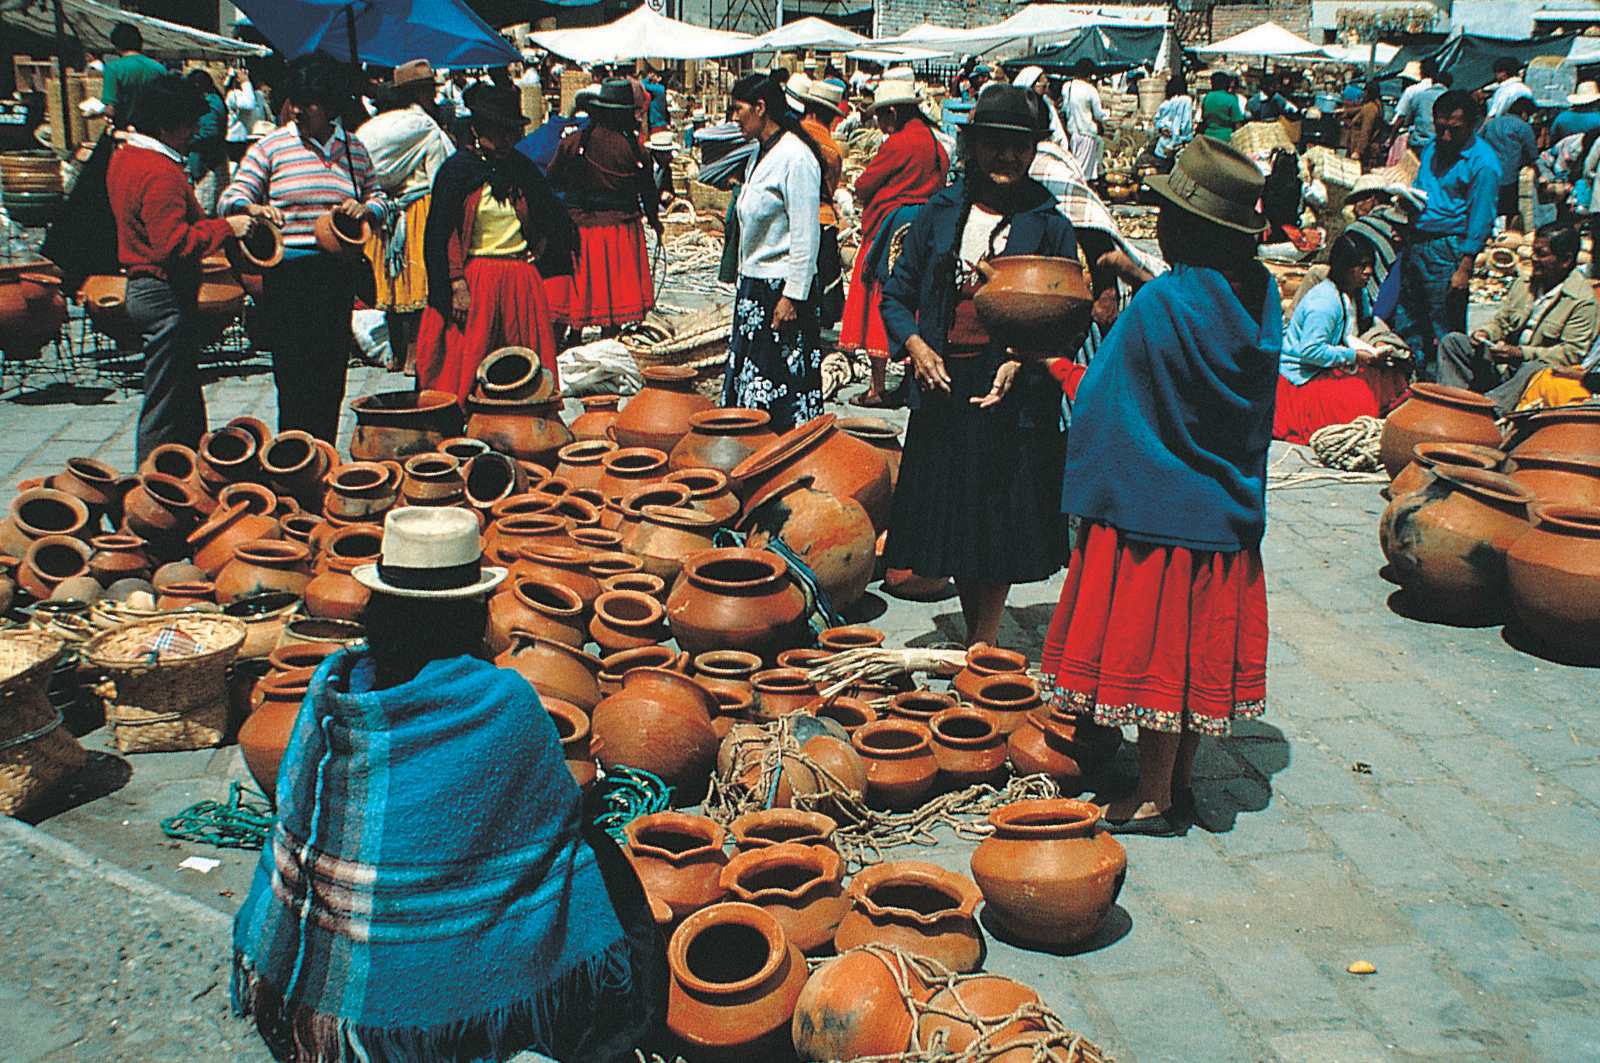 Market day in Ecuador